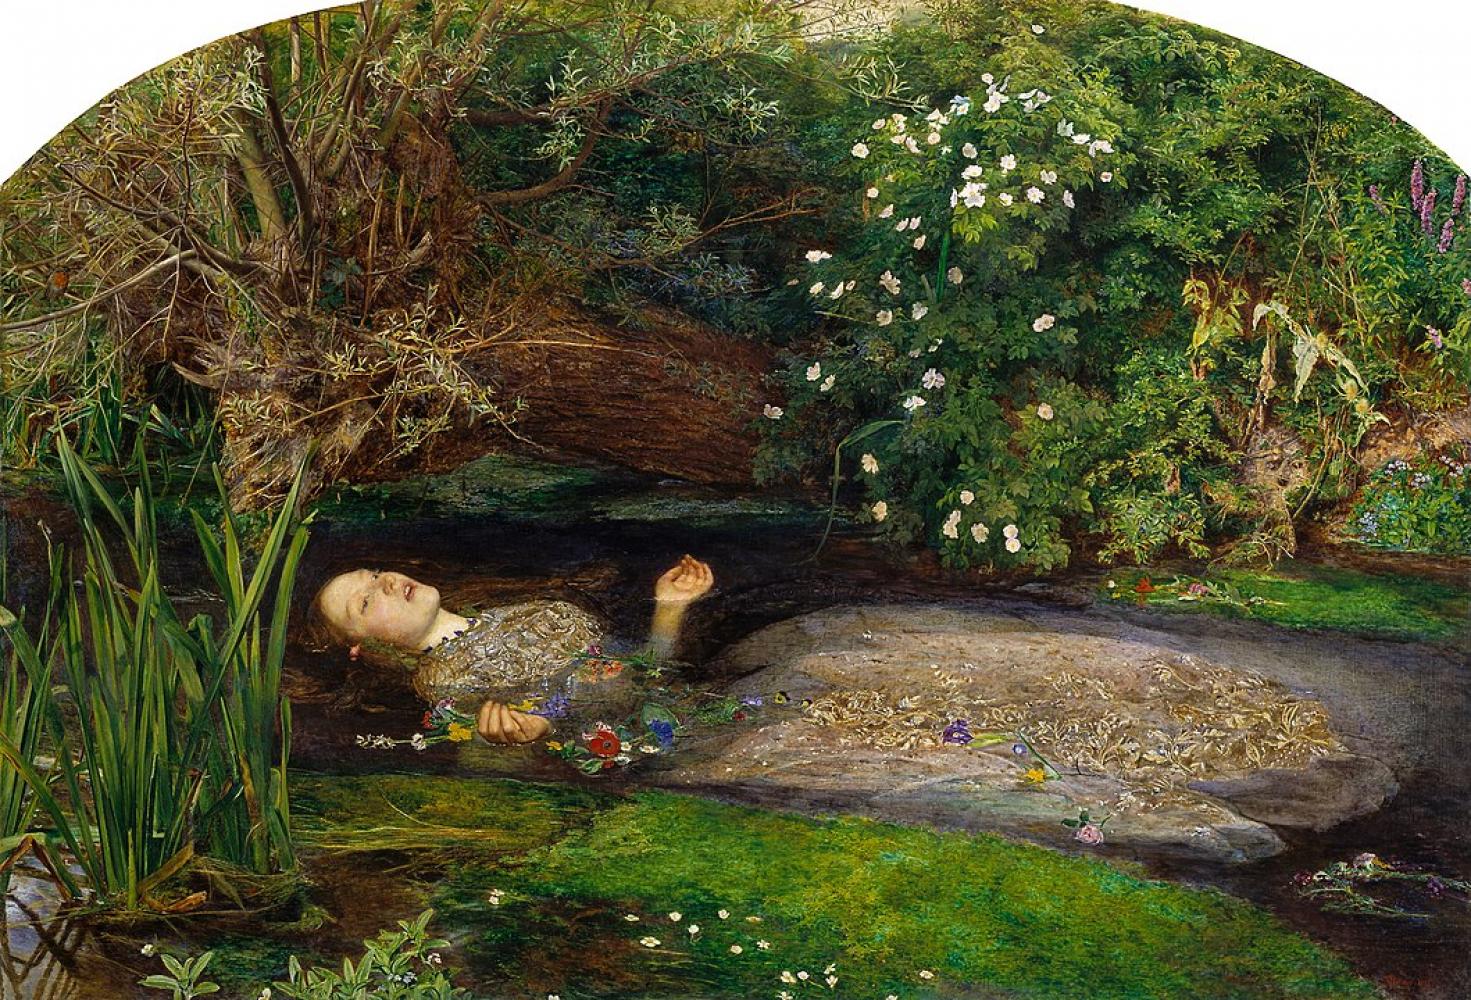 Sir John Everett Millais "Ophelia", 1851-52